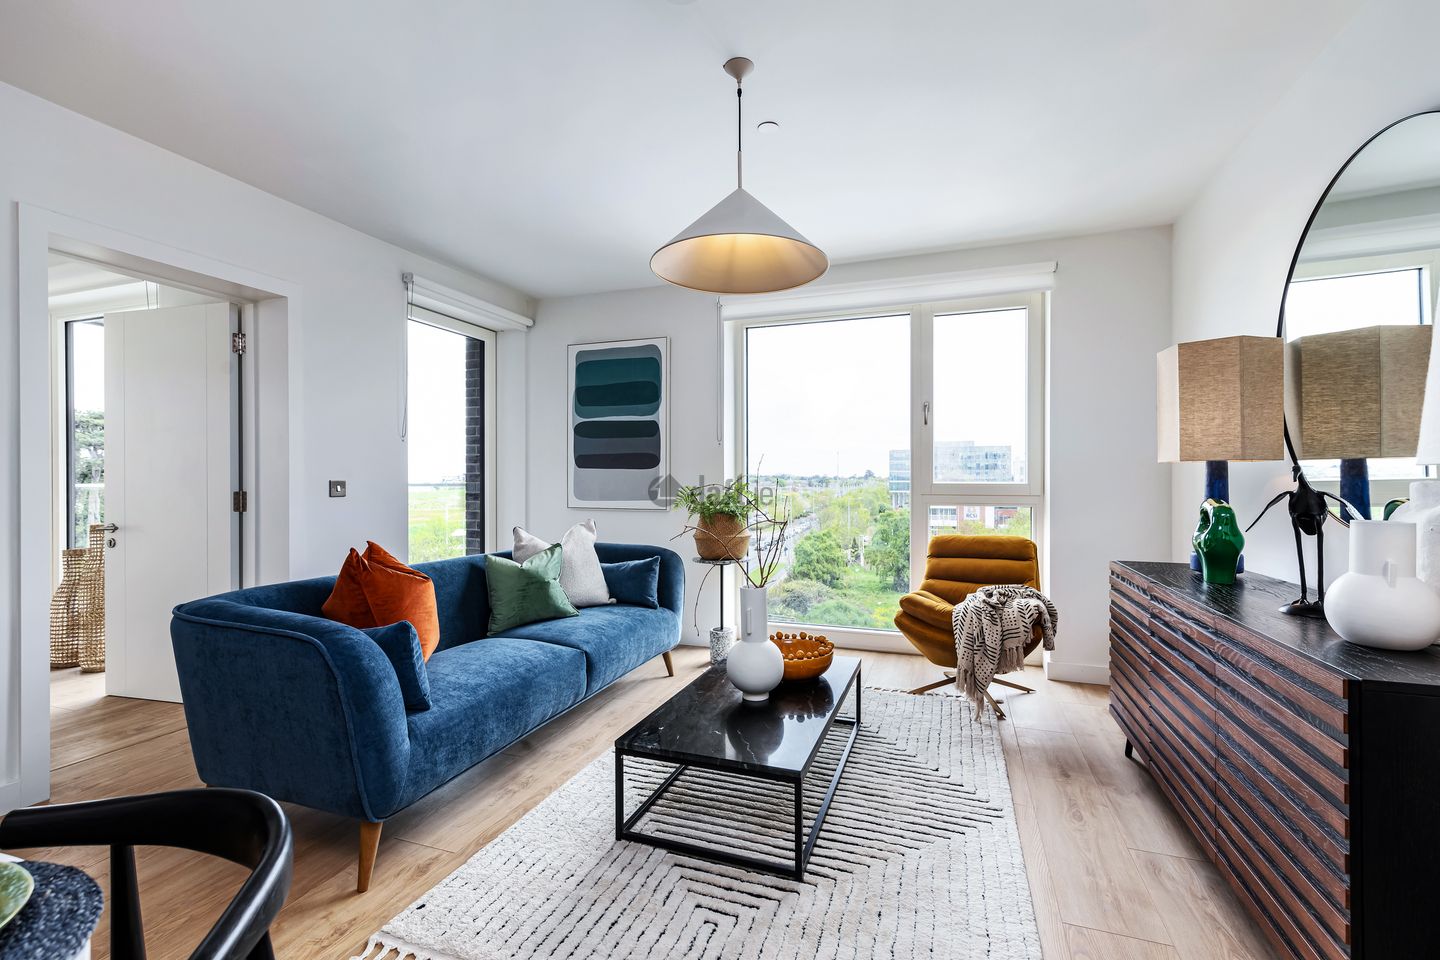 2 bedroom Apartment, The Hudson - Sandyford Central, Sandyford Central, Sandyford, Dublin 18